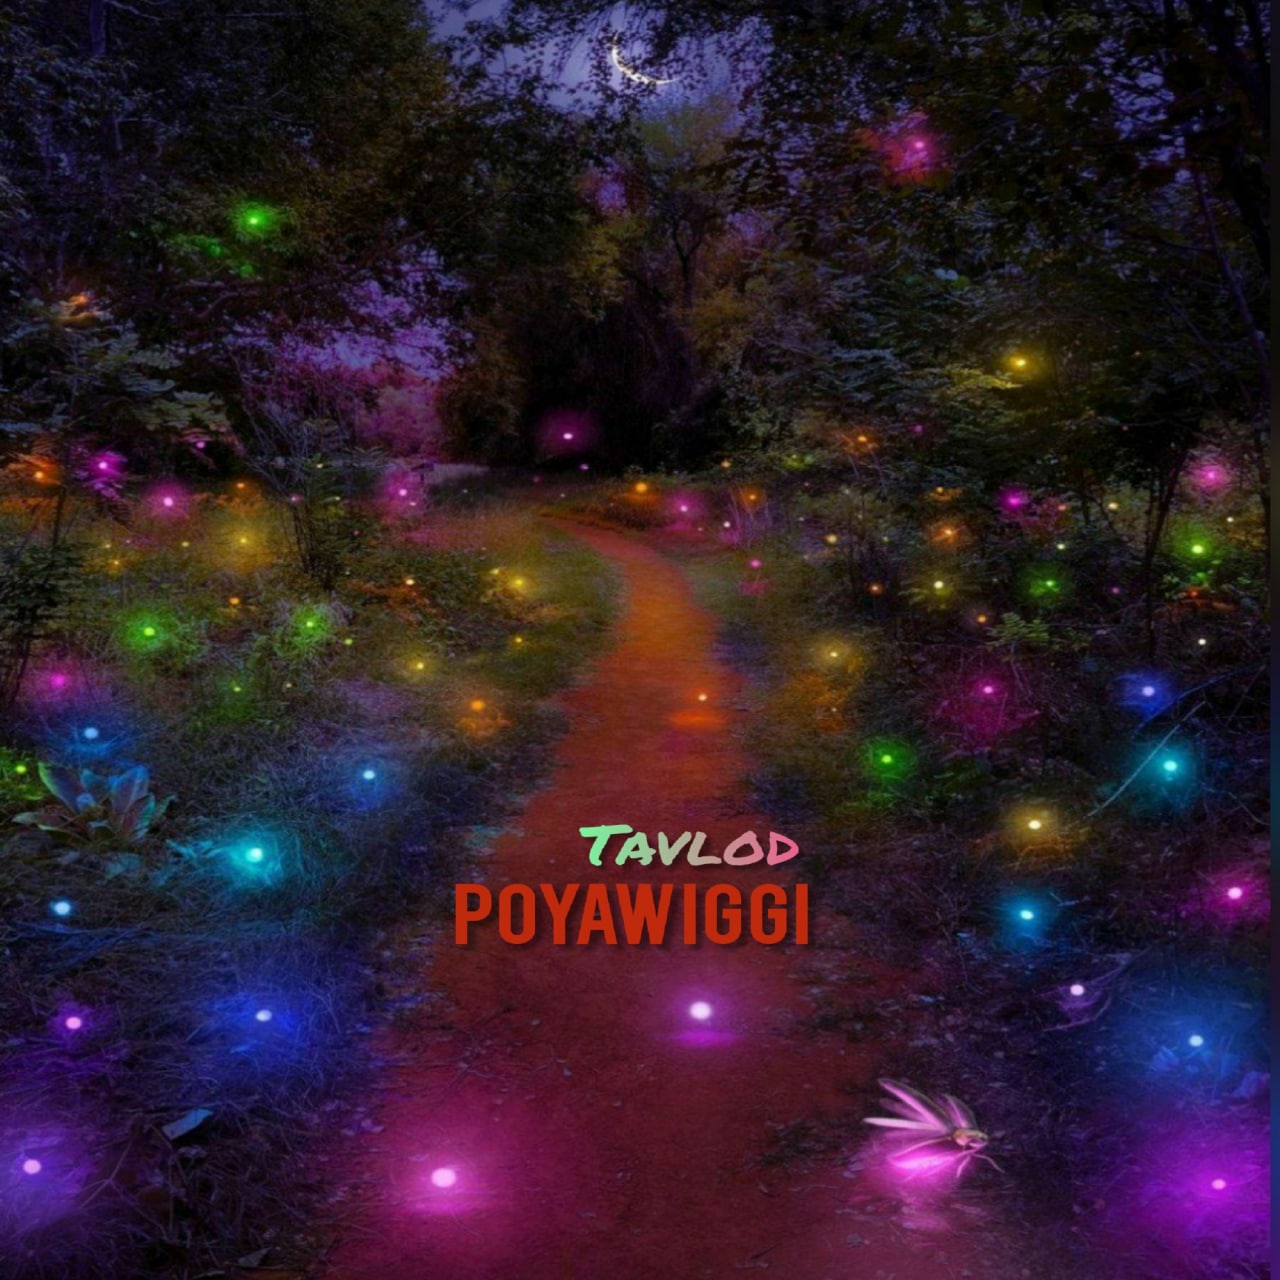 Poyawiggi – Tavalod